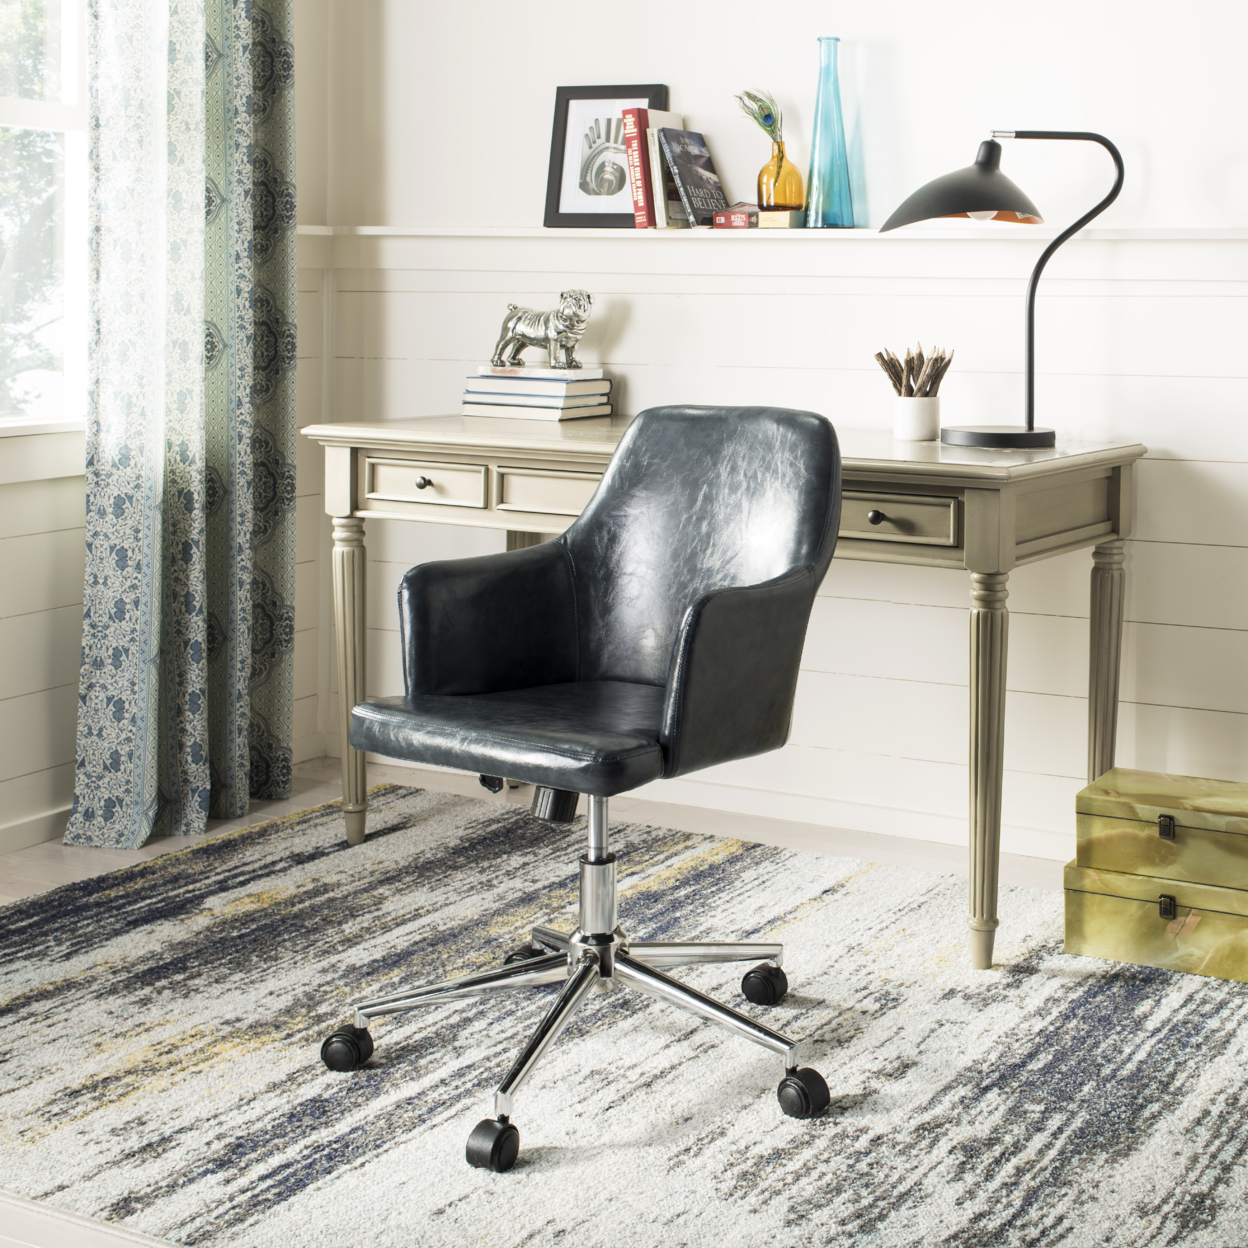 SAFAVIEH Cadence Swivel Office Chair Dark Grey / Chrome